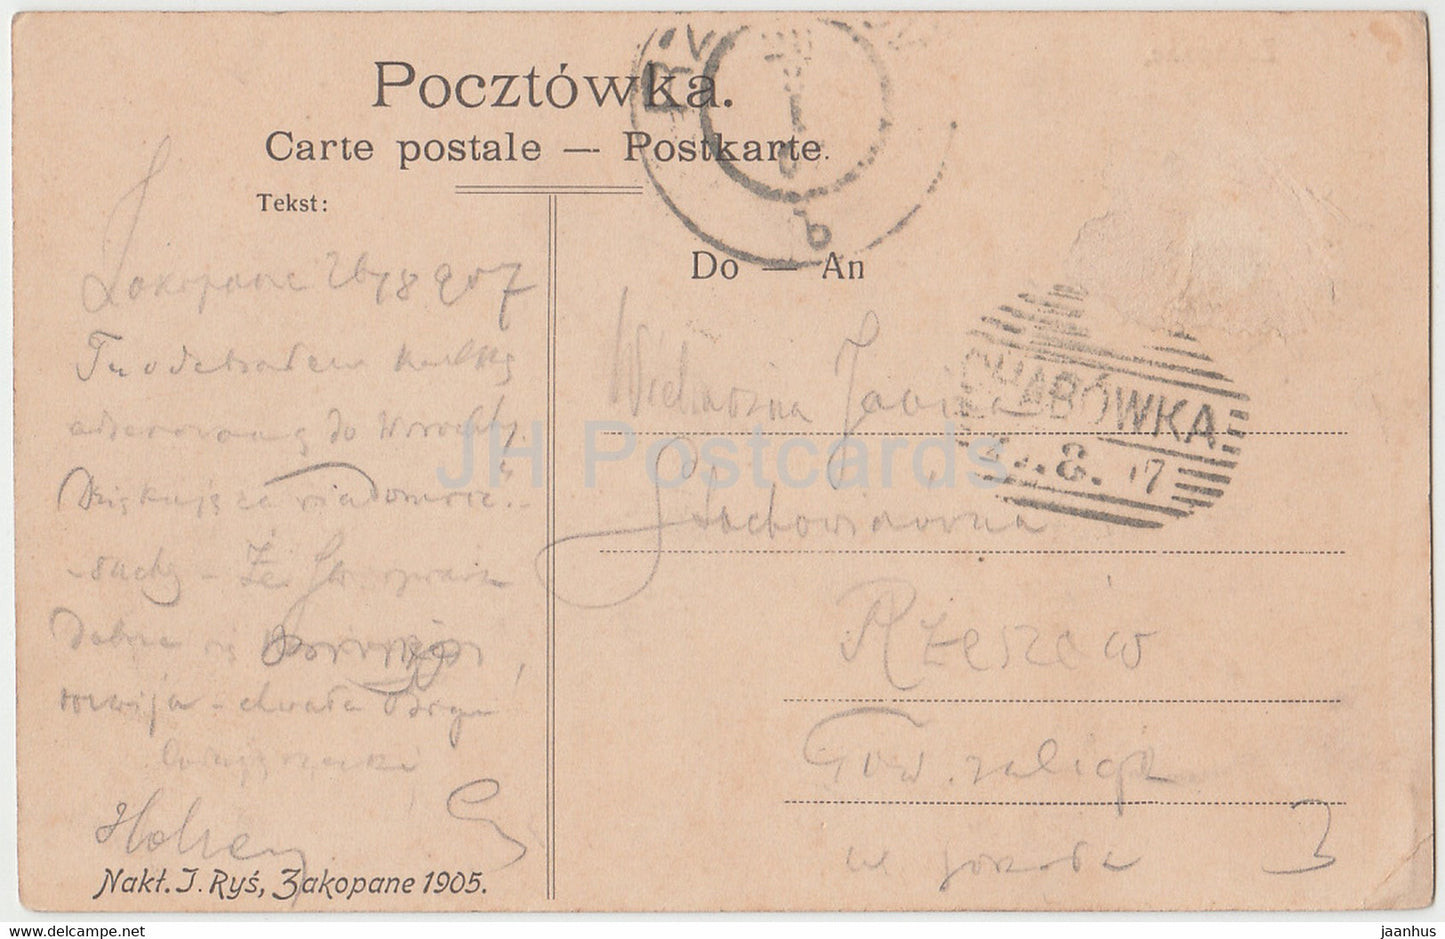 Zakopane - carte postale ancienne - 1907 - Pologne - utilisé